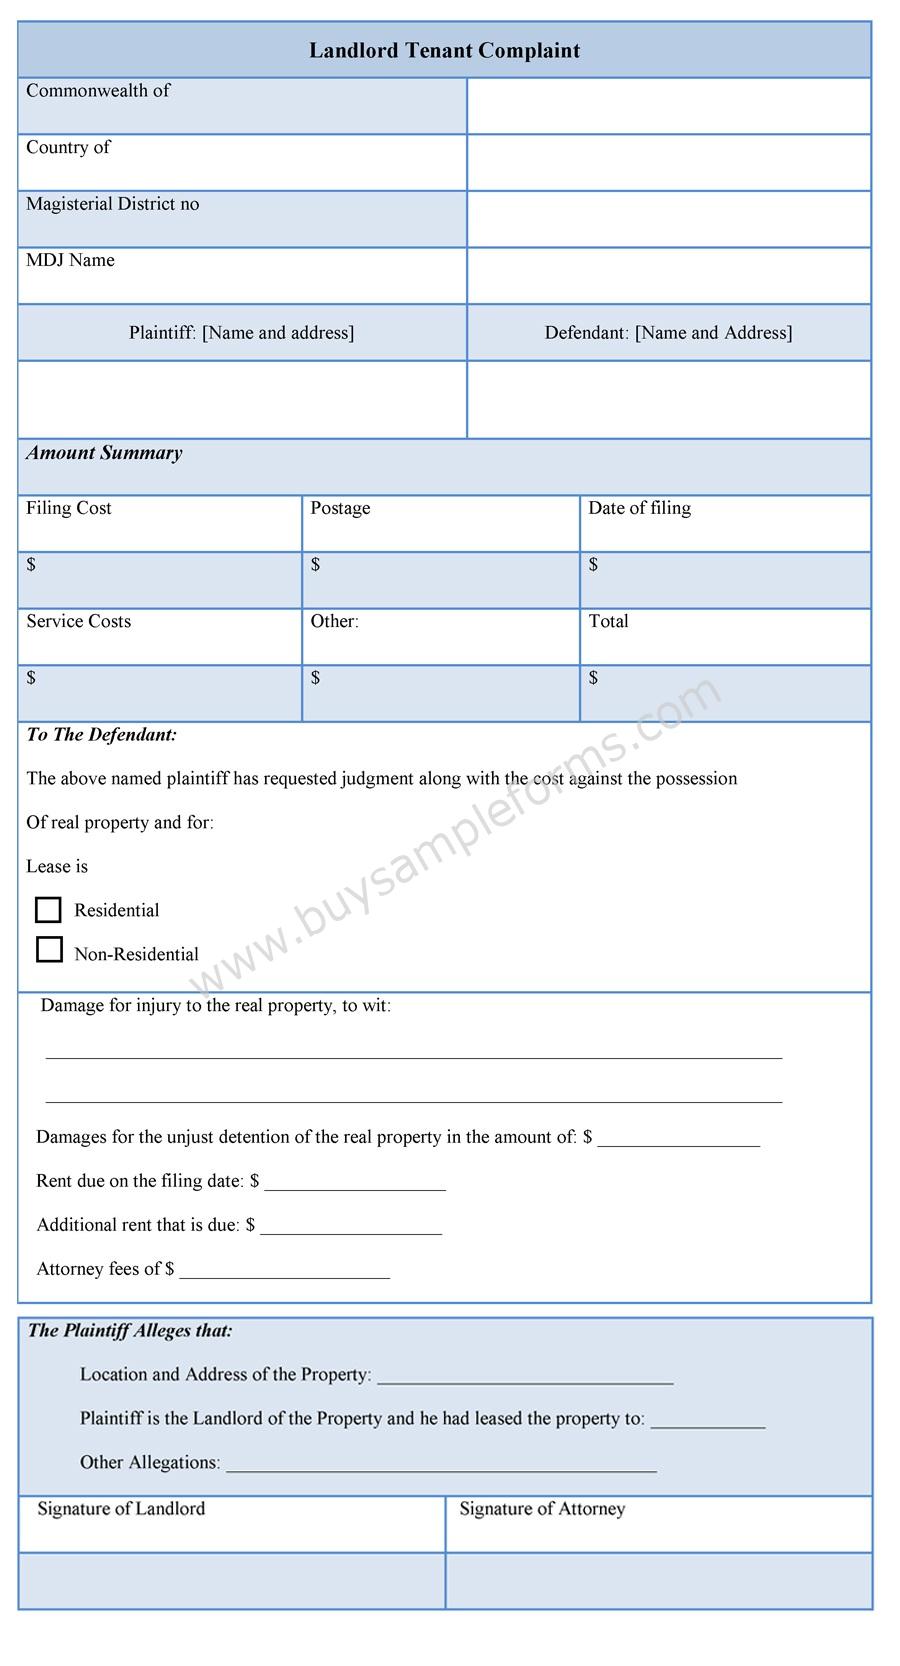 Landlord Tenant Complaint Form